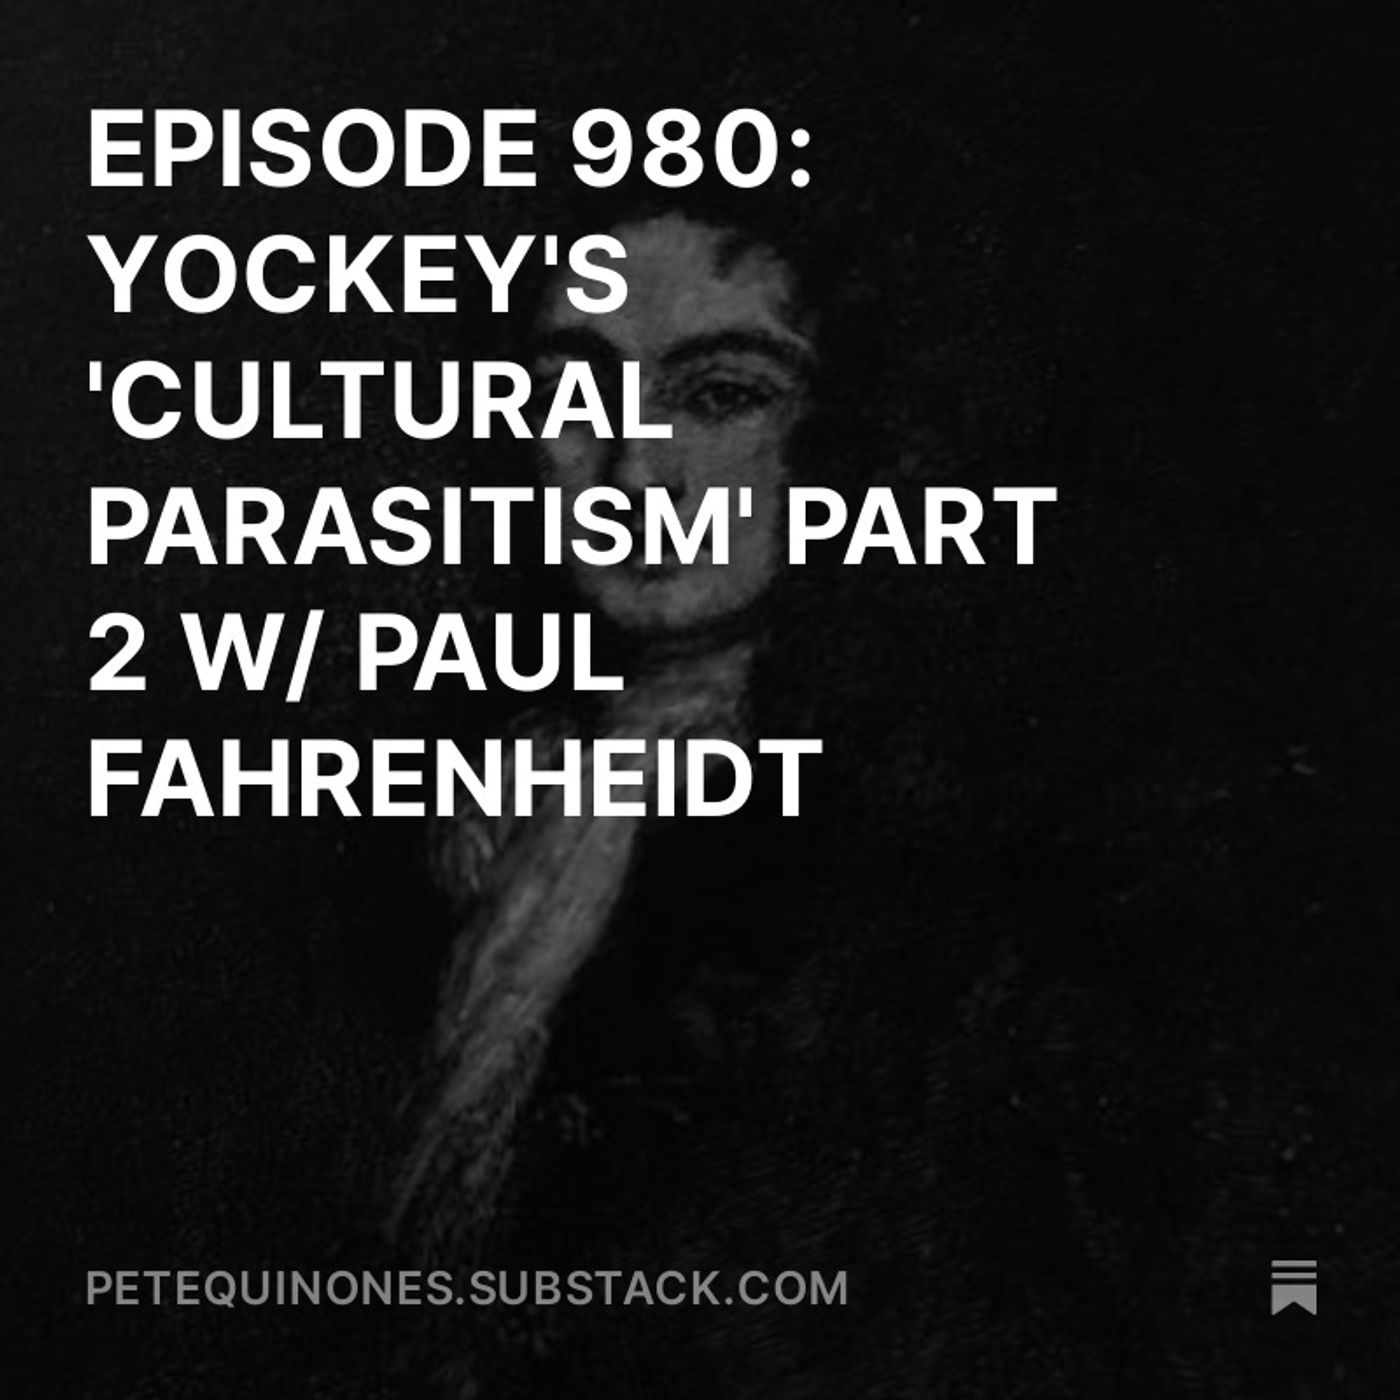 EPISODE 980: YOCKEY'S 'CULTURAL PARASITISM' PART 2 W/ PAUL FAHRENHEIDT